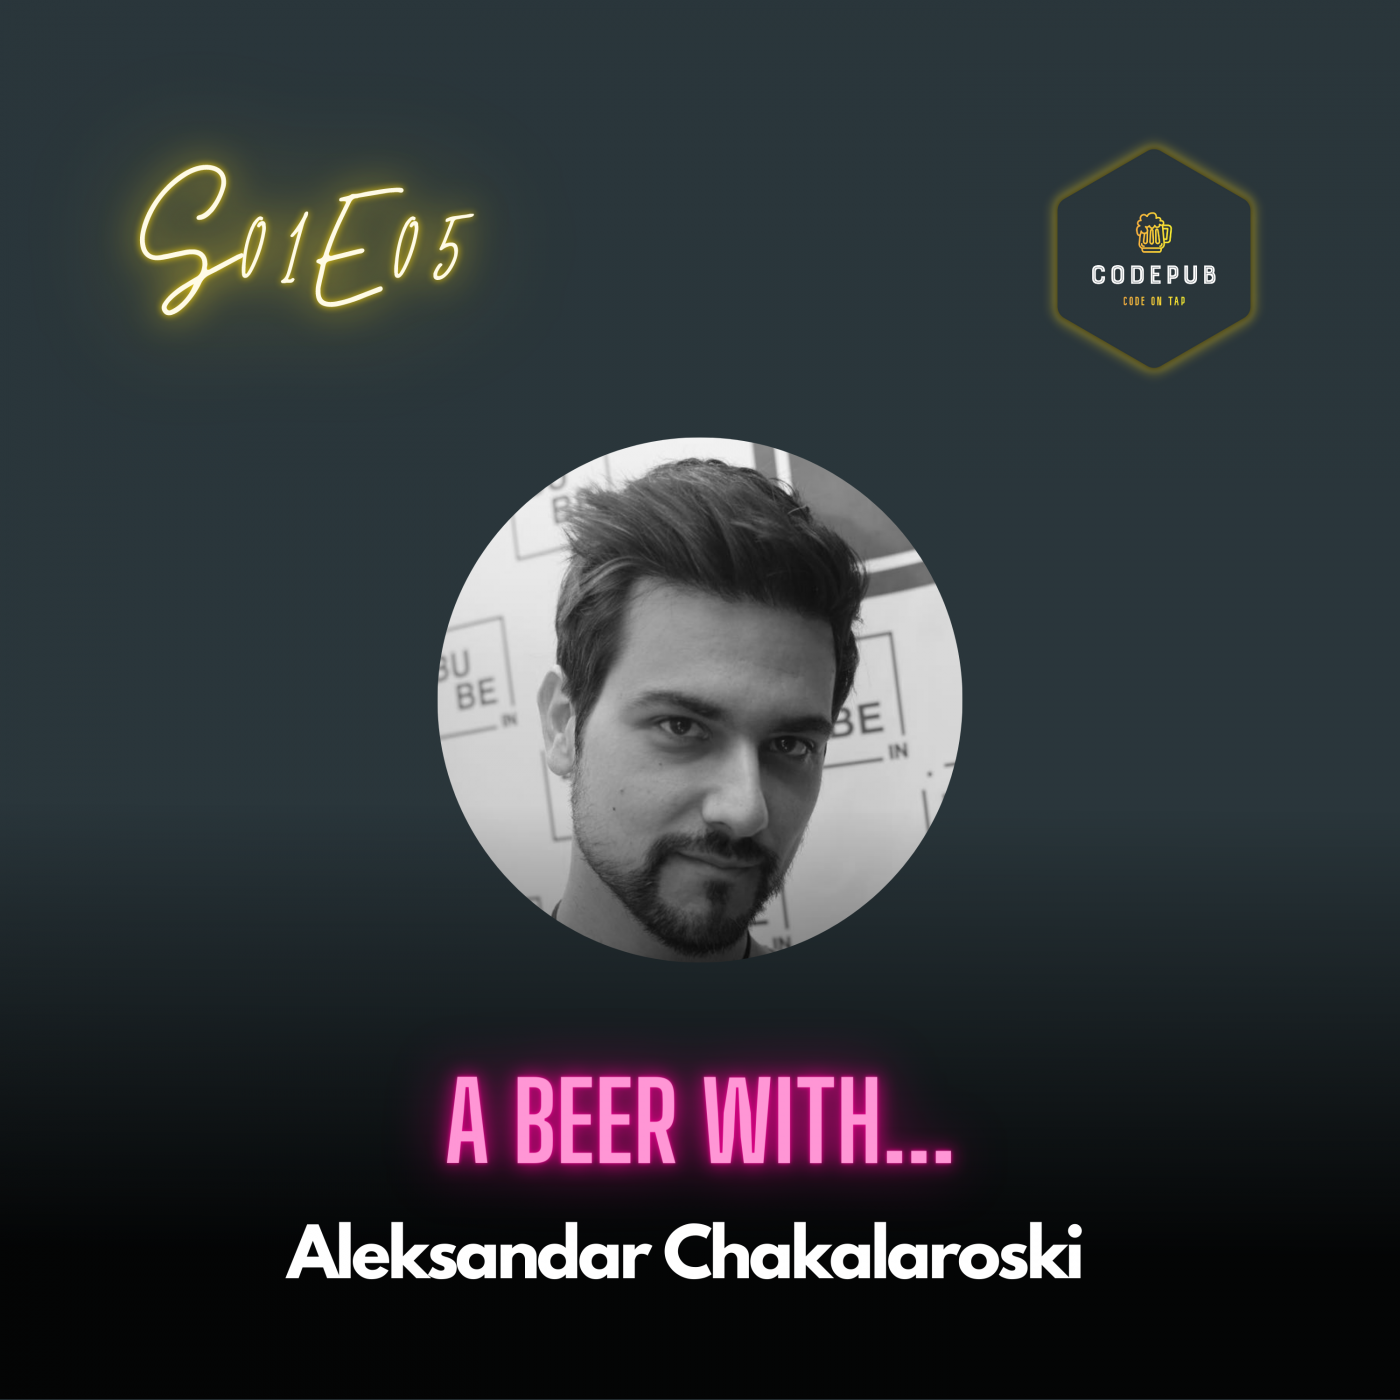 A beer with... Aleksandar Chakalaroski